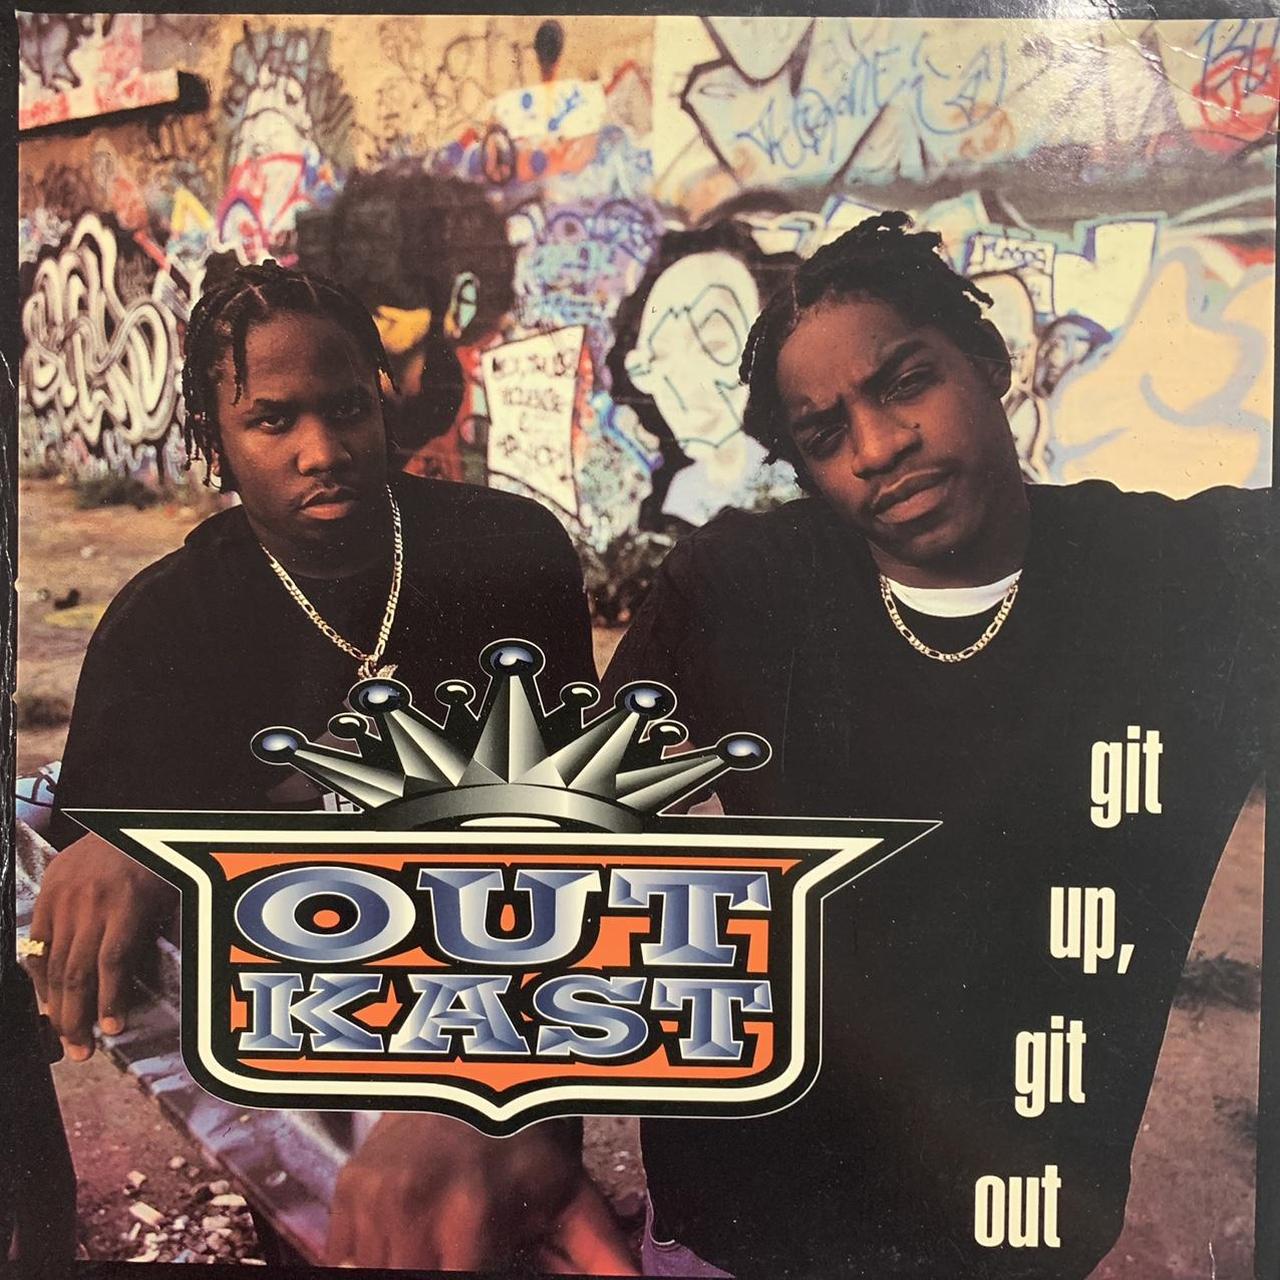 OutKast “Git Up’ Git Out” 4 Track 12inch Vinyl